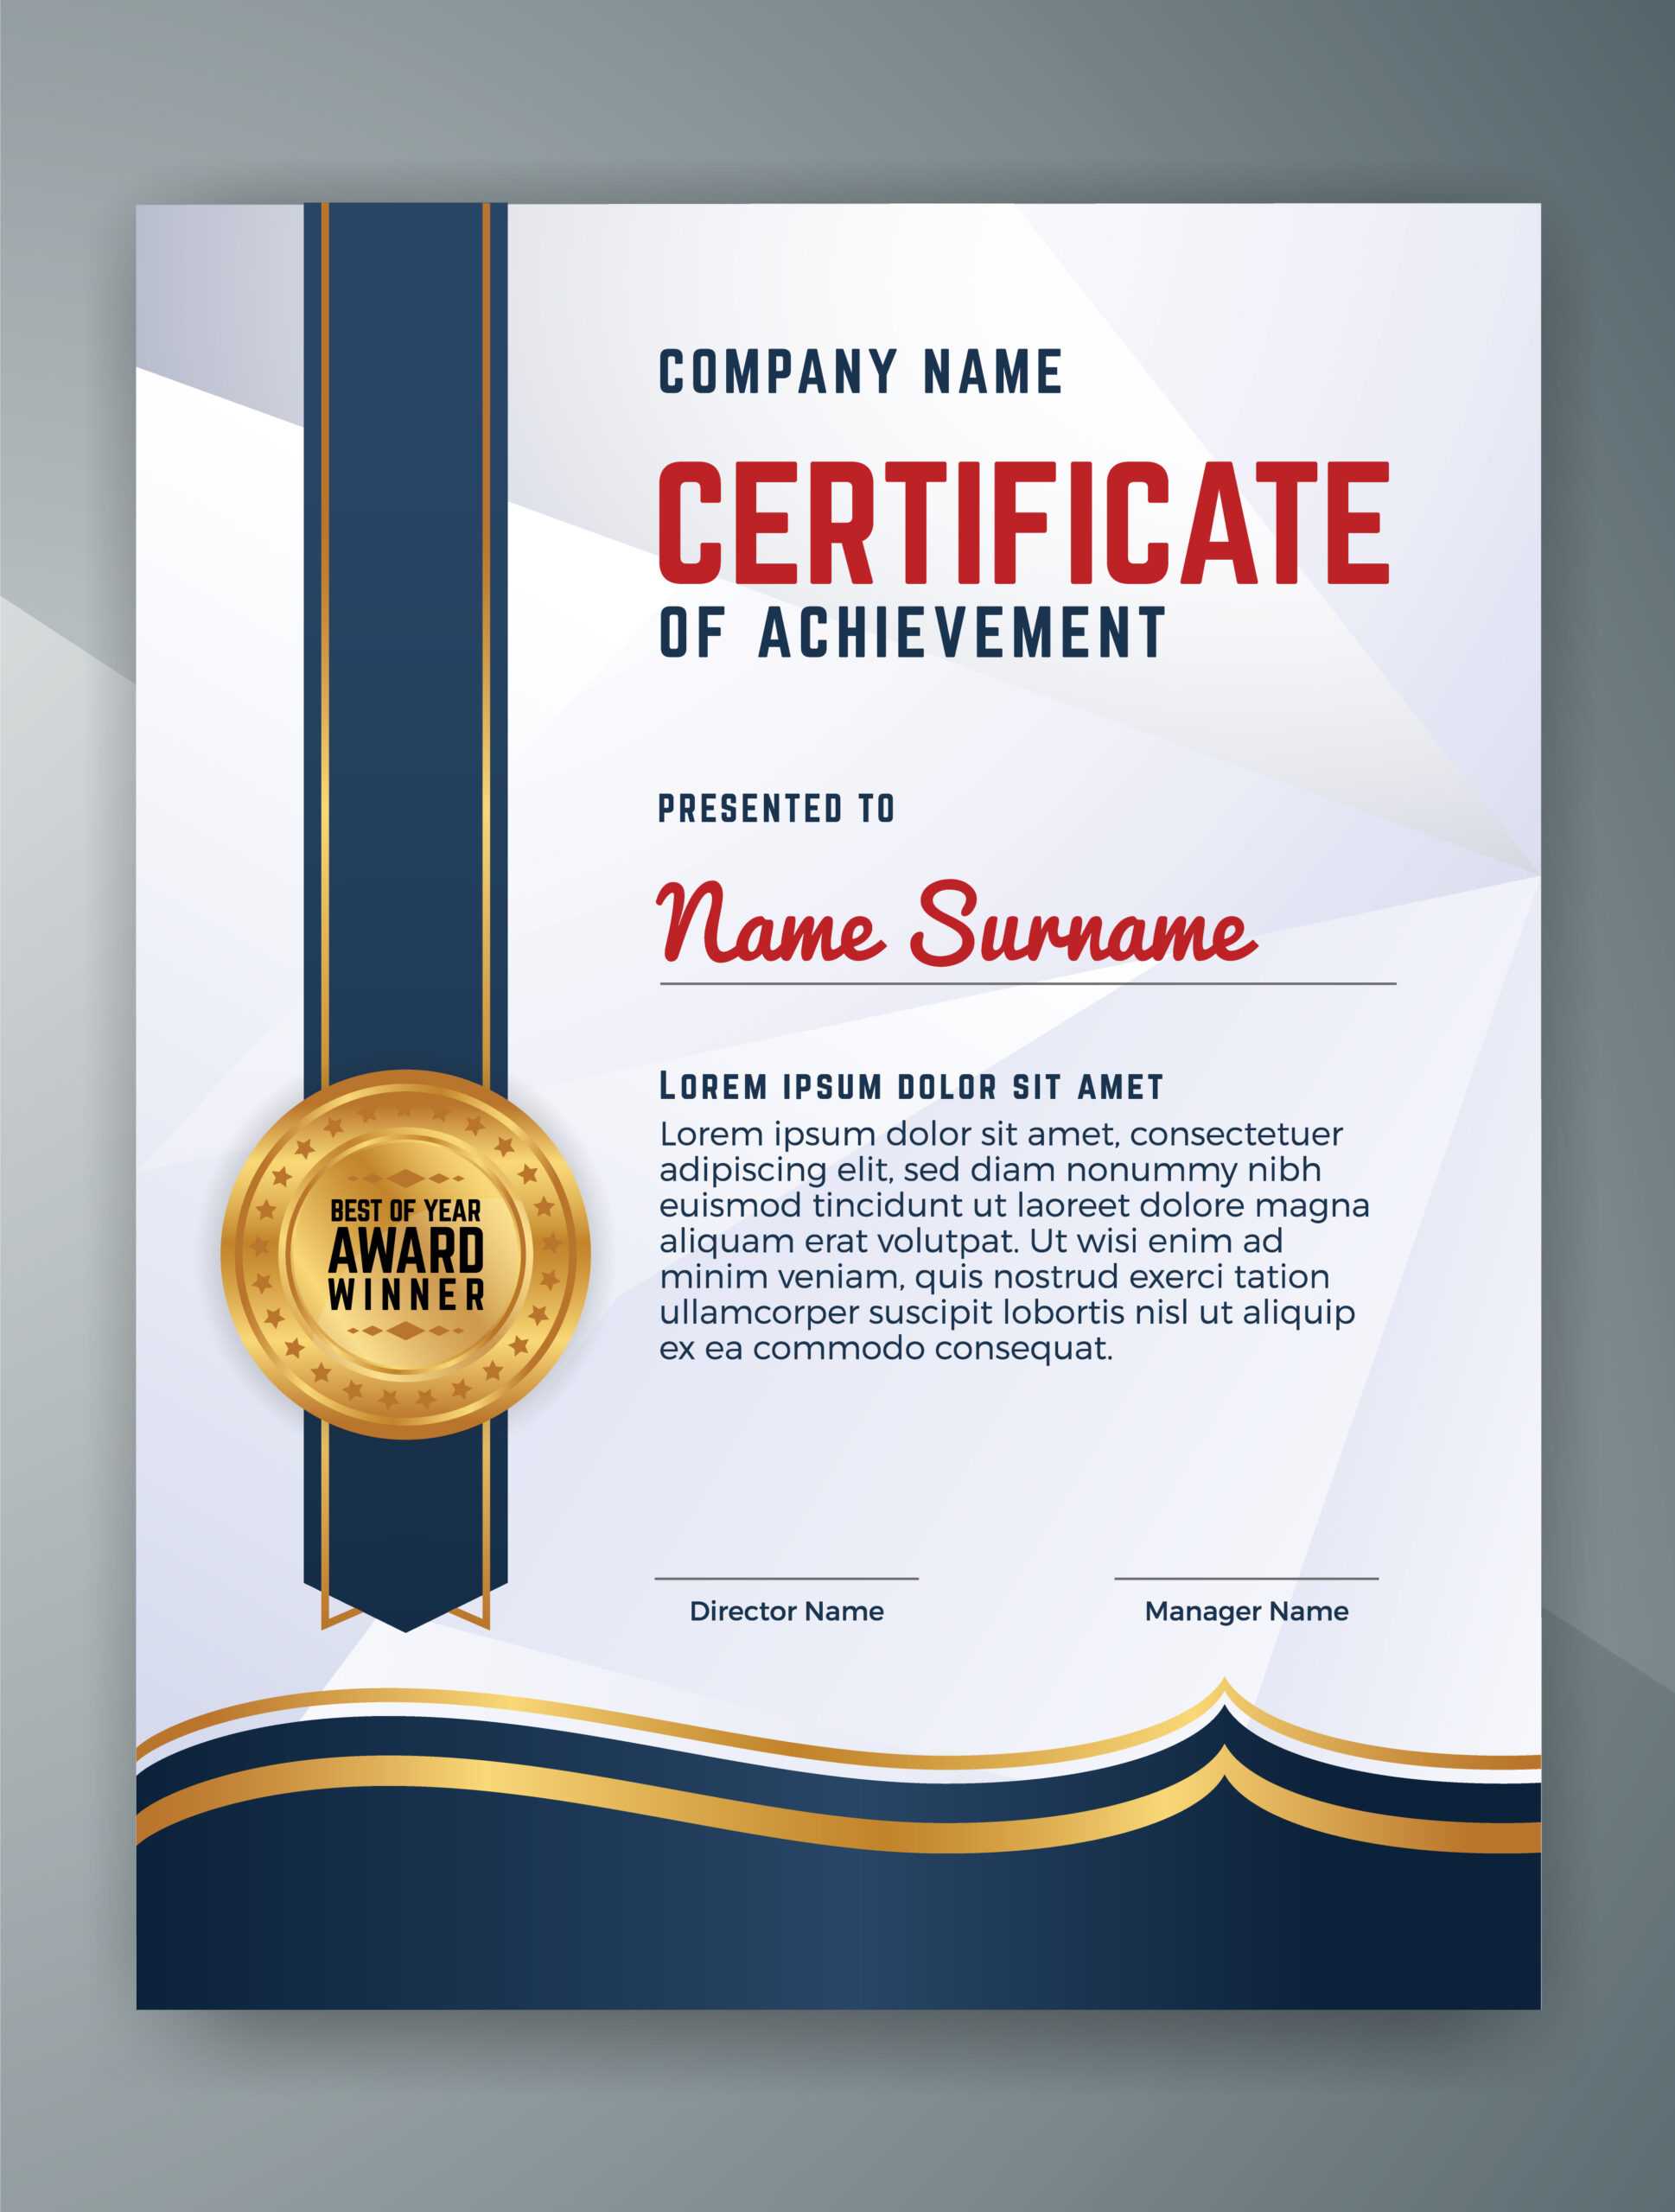 Multipurpose Professional Certificate Template Design With Professional Award Certificate Template